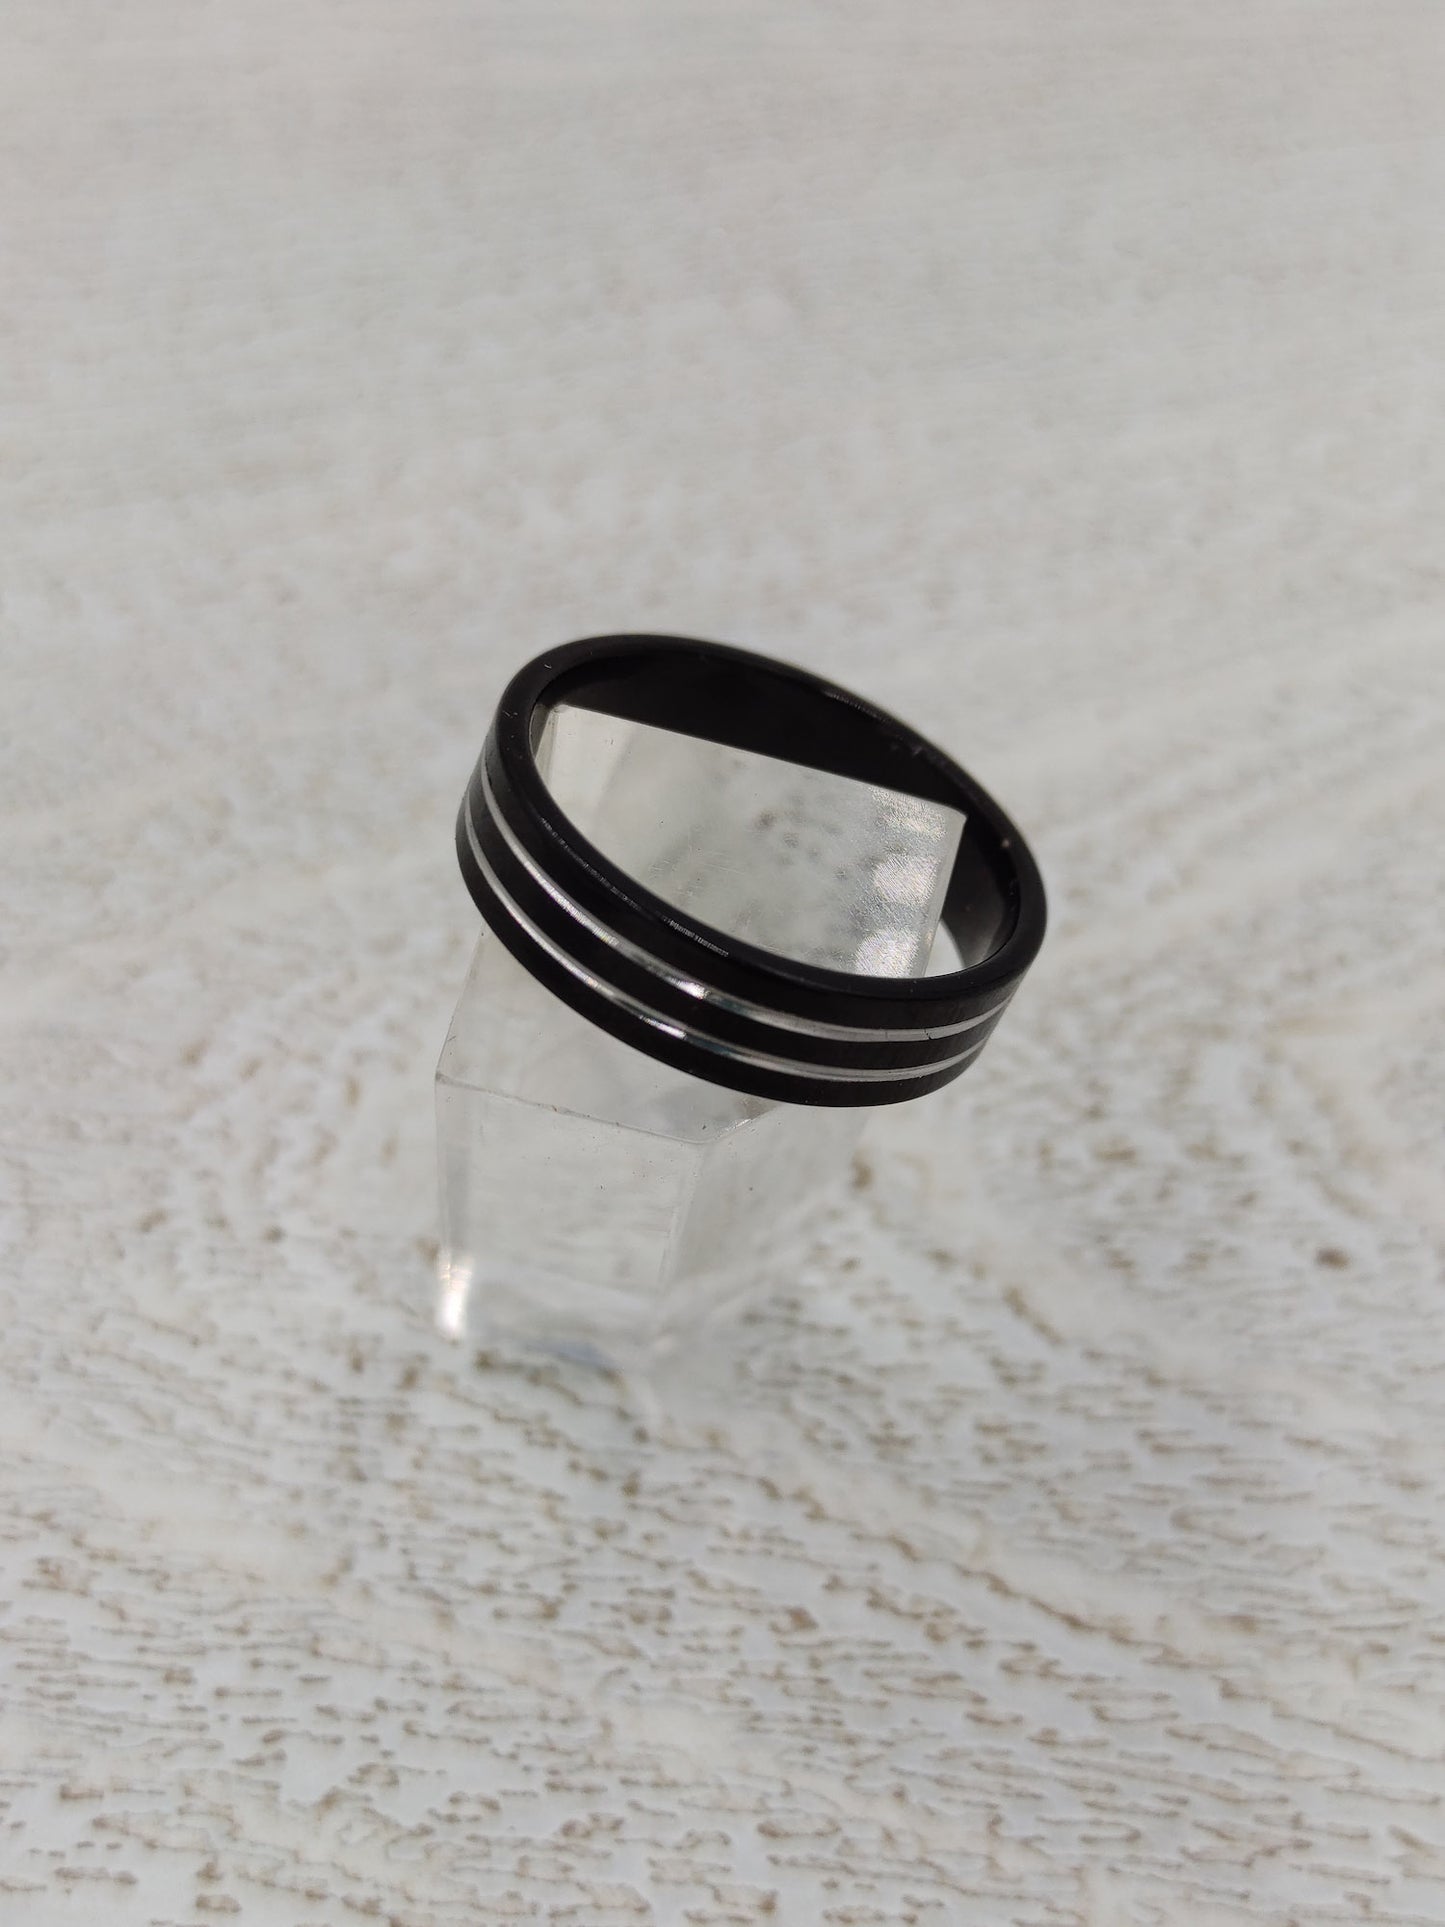 Black steel wedding ring with silver stripes - R066